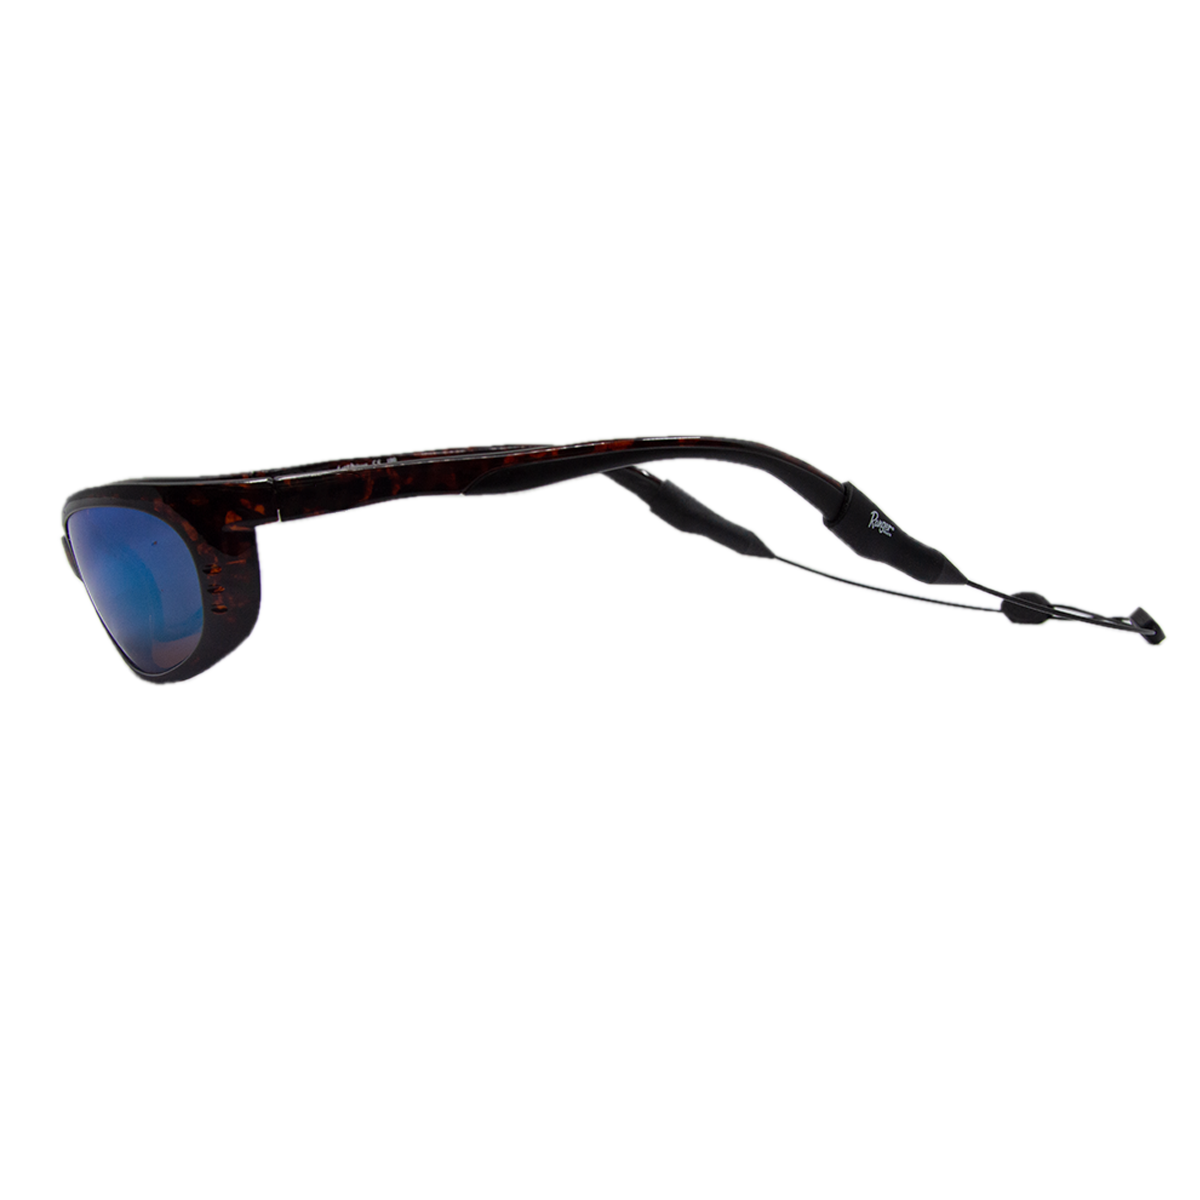 Cable Sunglasses Strap - RangerBoatsGear